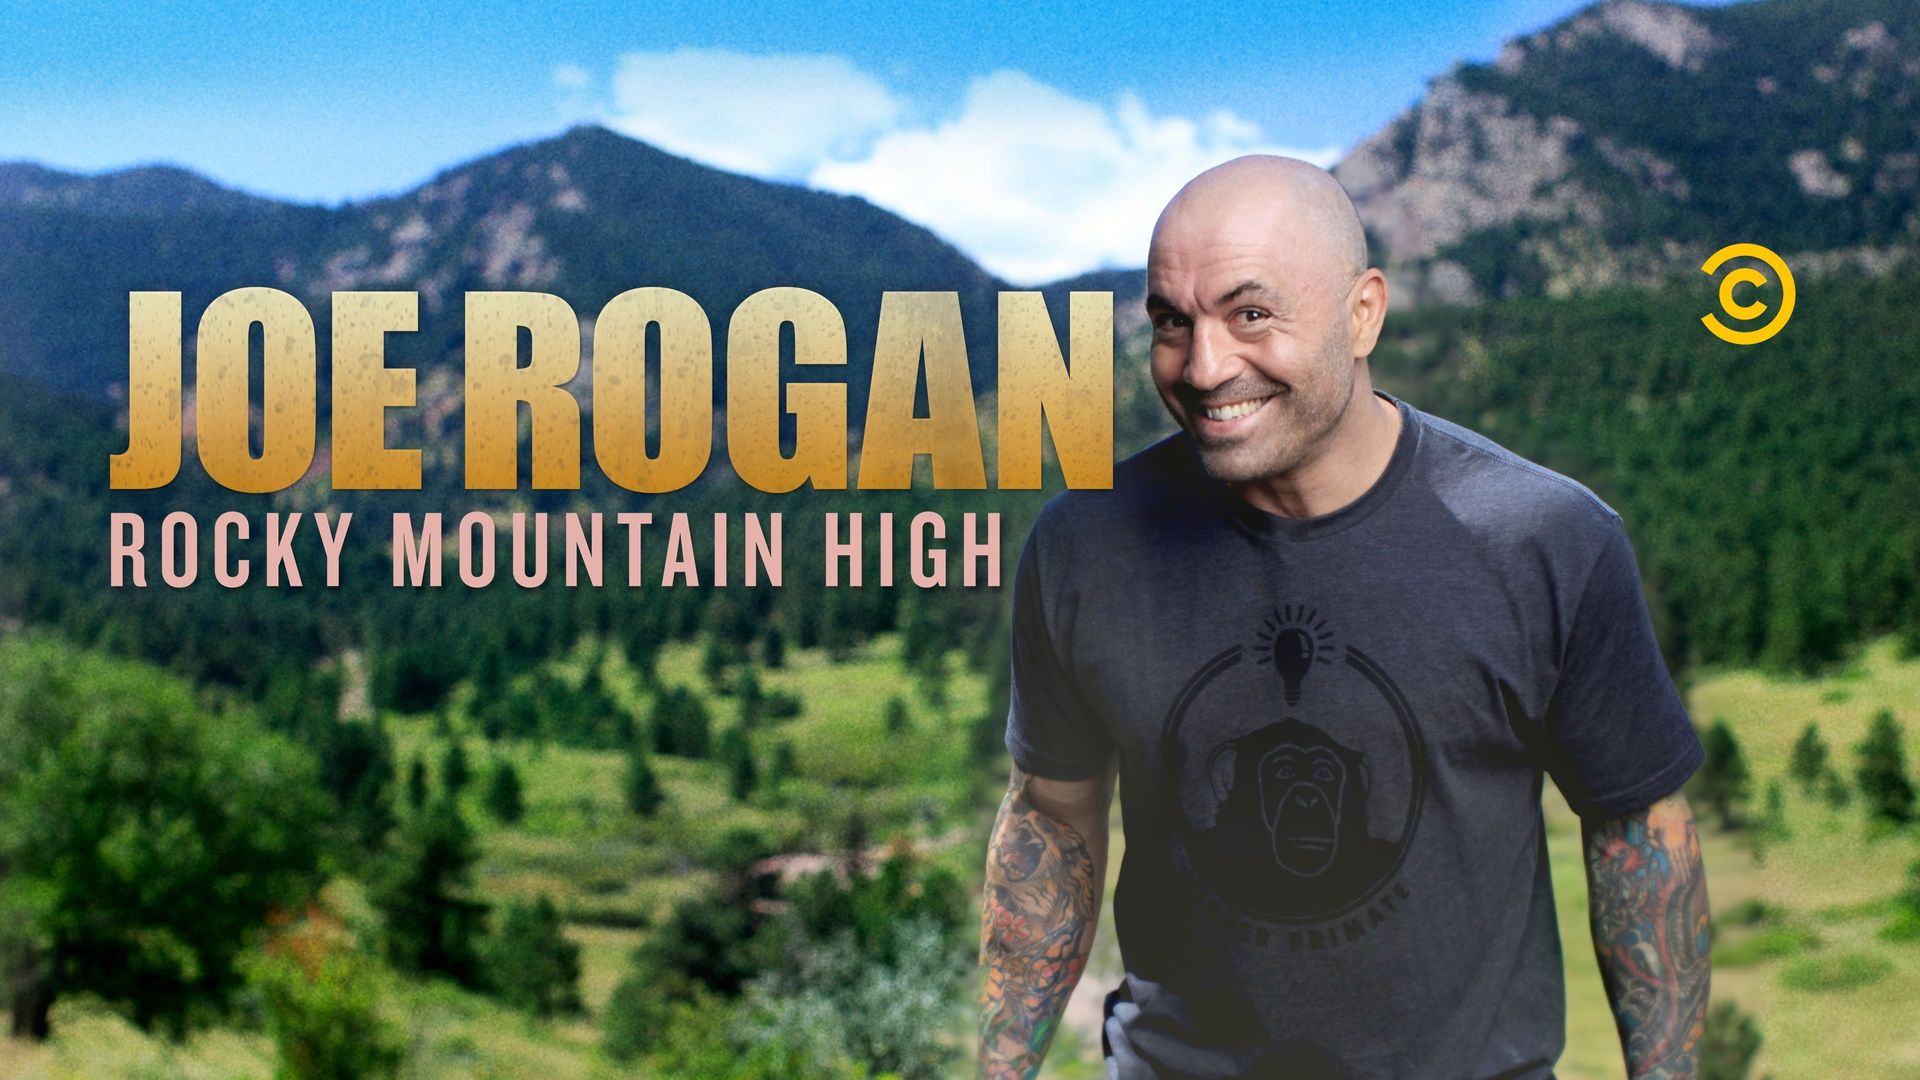 Joe Rogan: Rocky Mountain High background